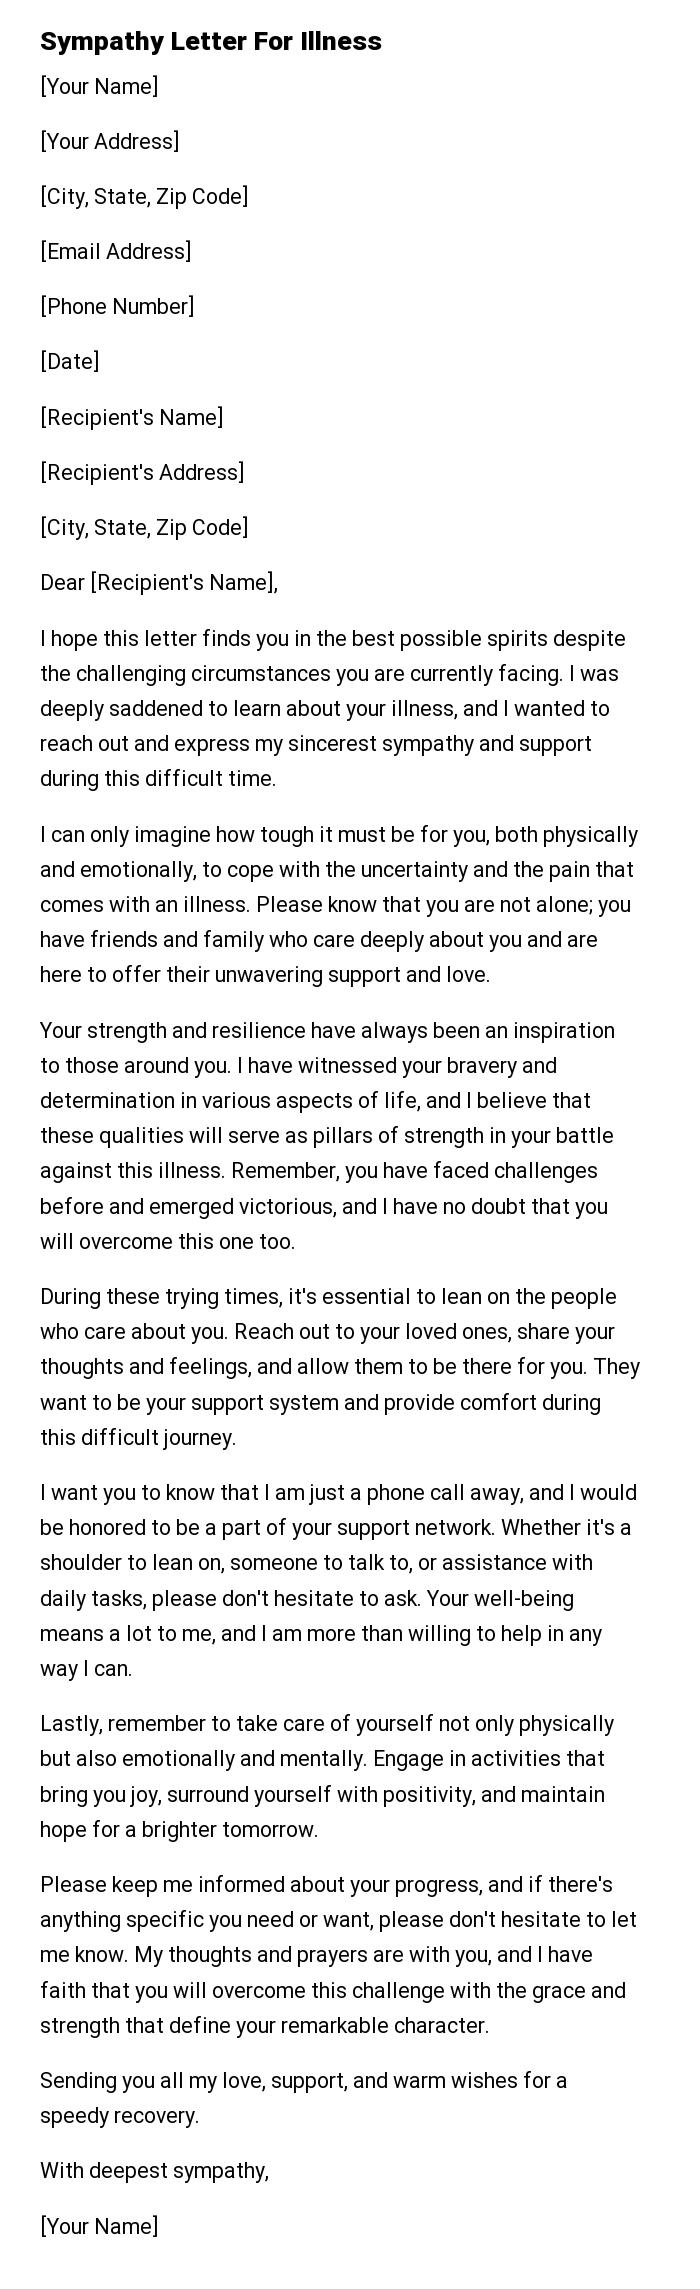 Sympathy Letter For Illness